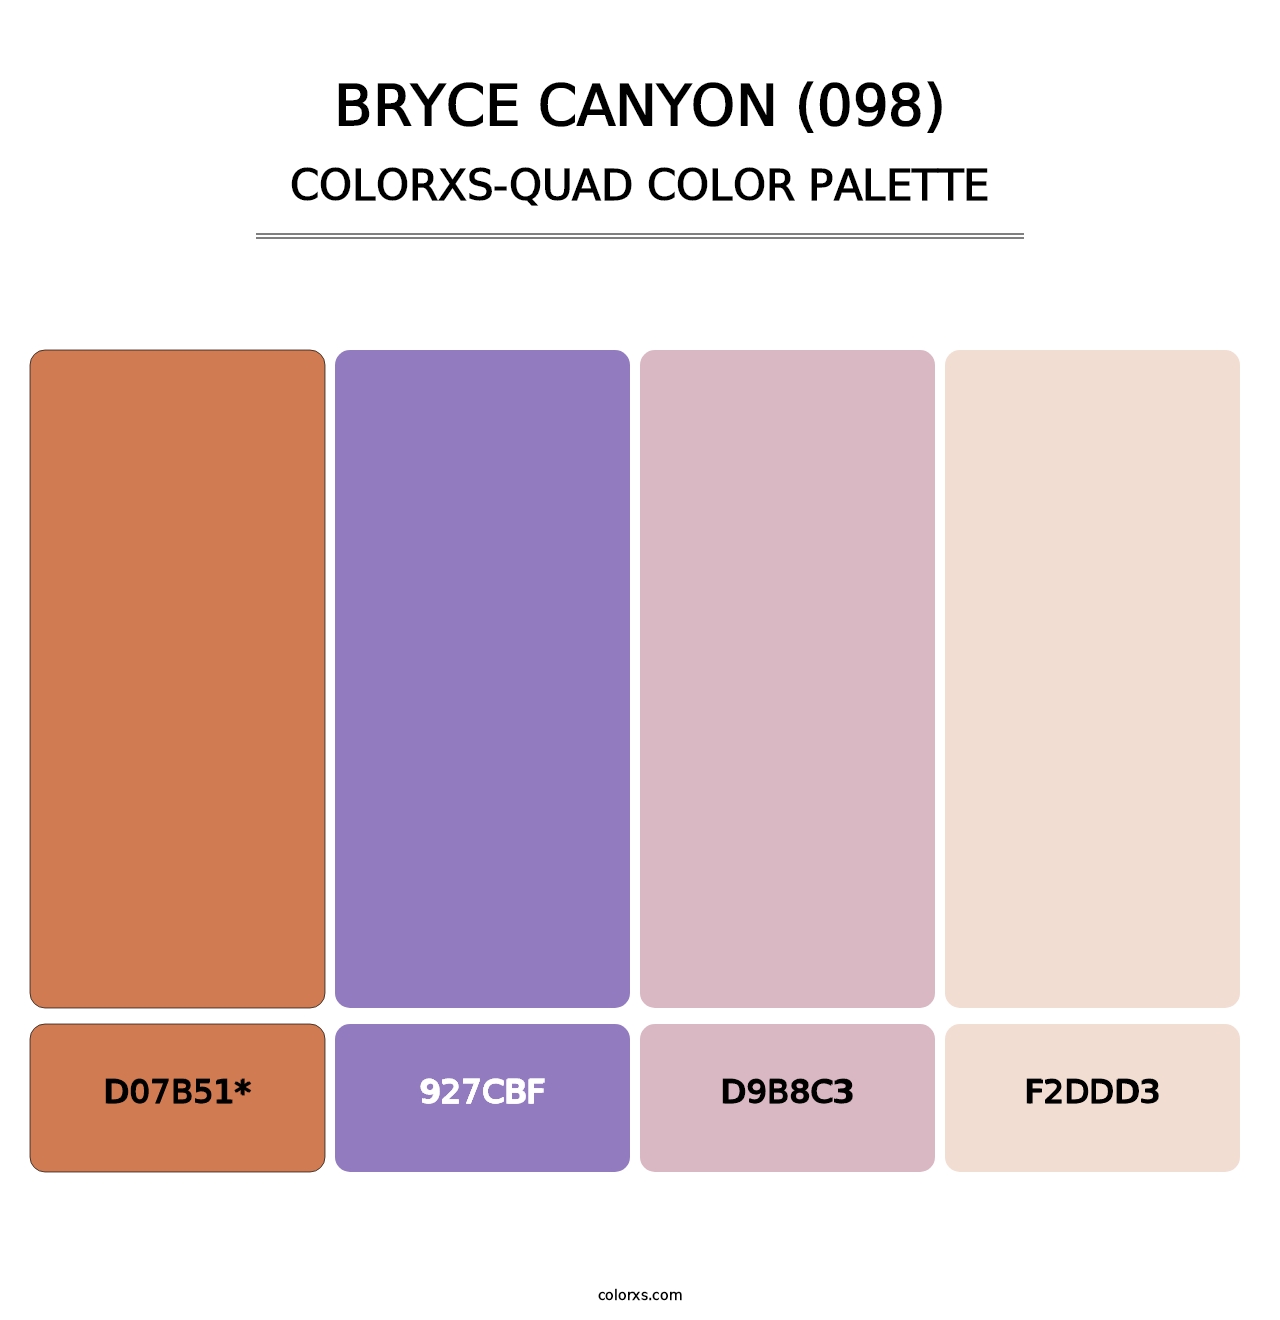 Bryce Canyon (098) - Colorxs Quad Palette